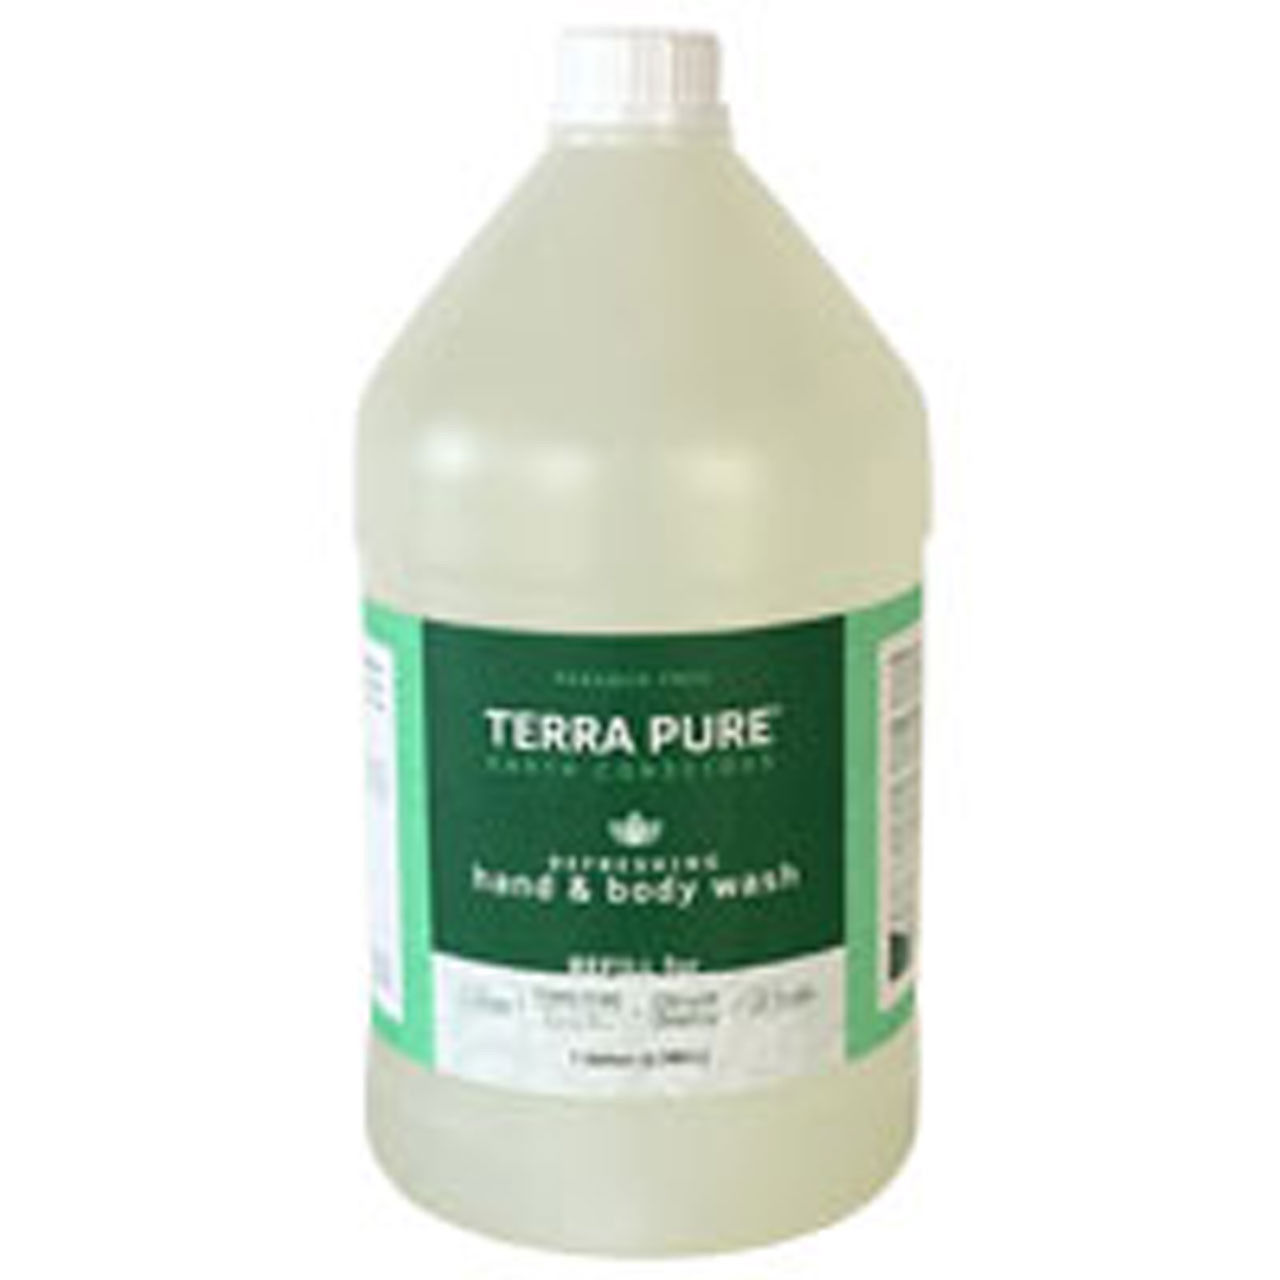 In what way is Terra Pure Green Tea Bulk sold?